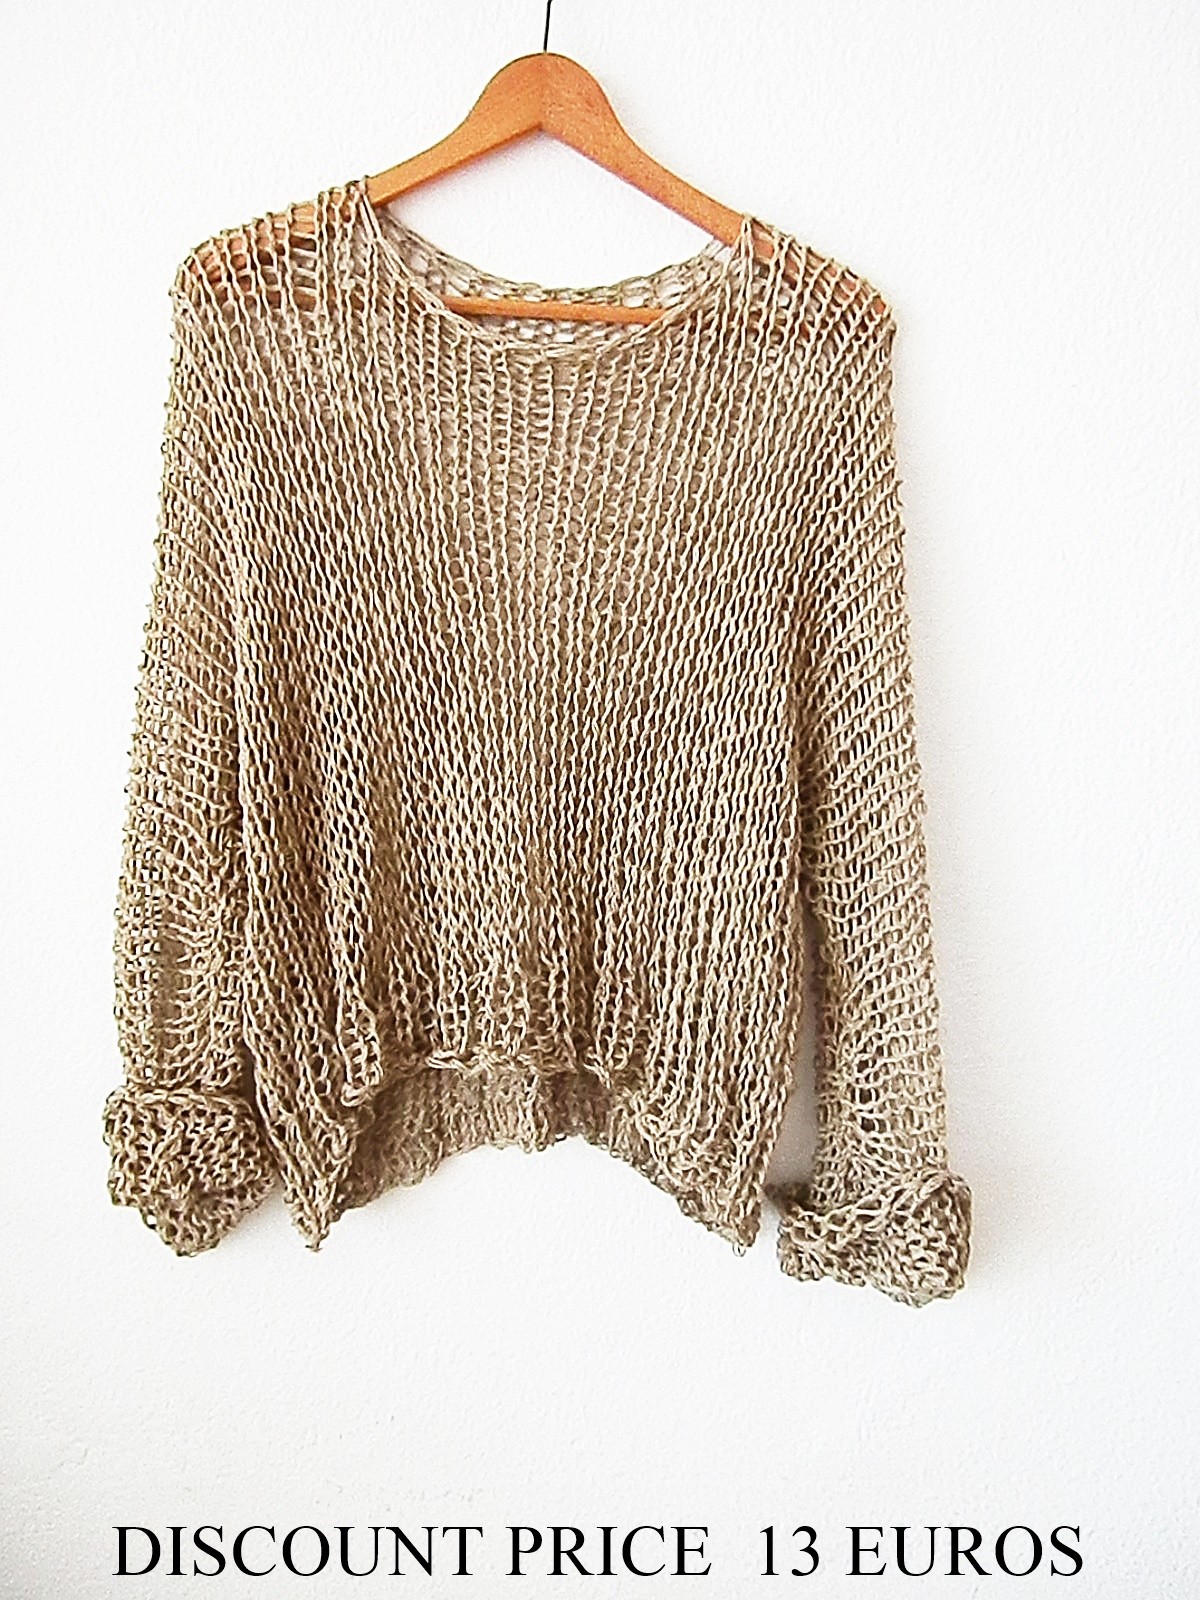 New look !!
Oversize camel sweater